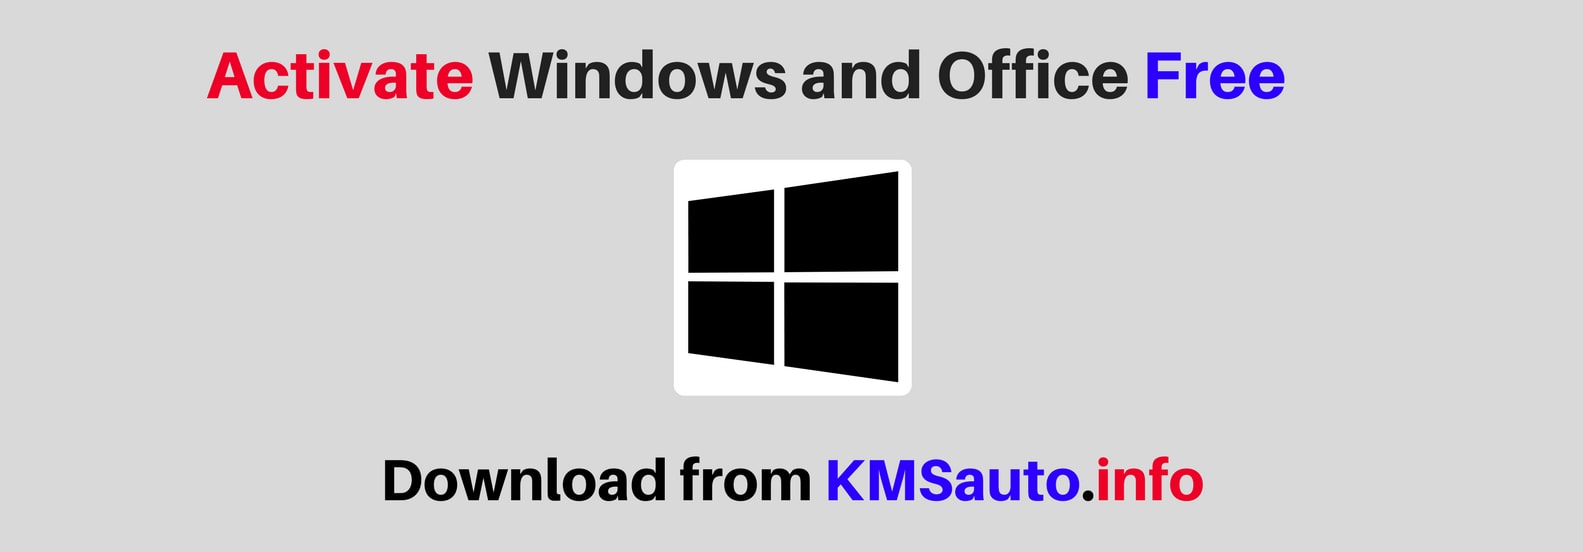 kmsauto net 2018 free download